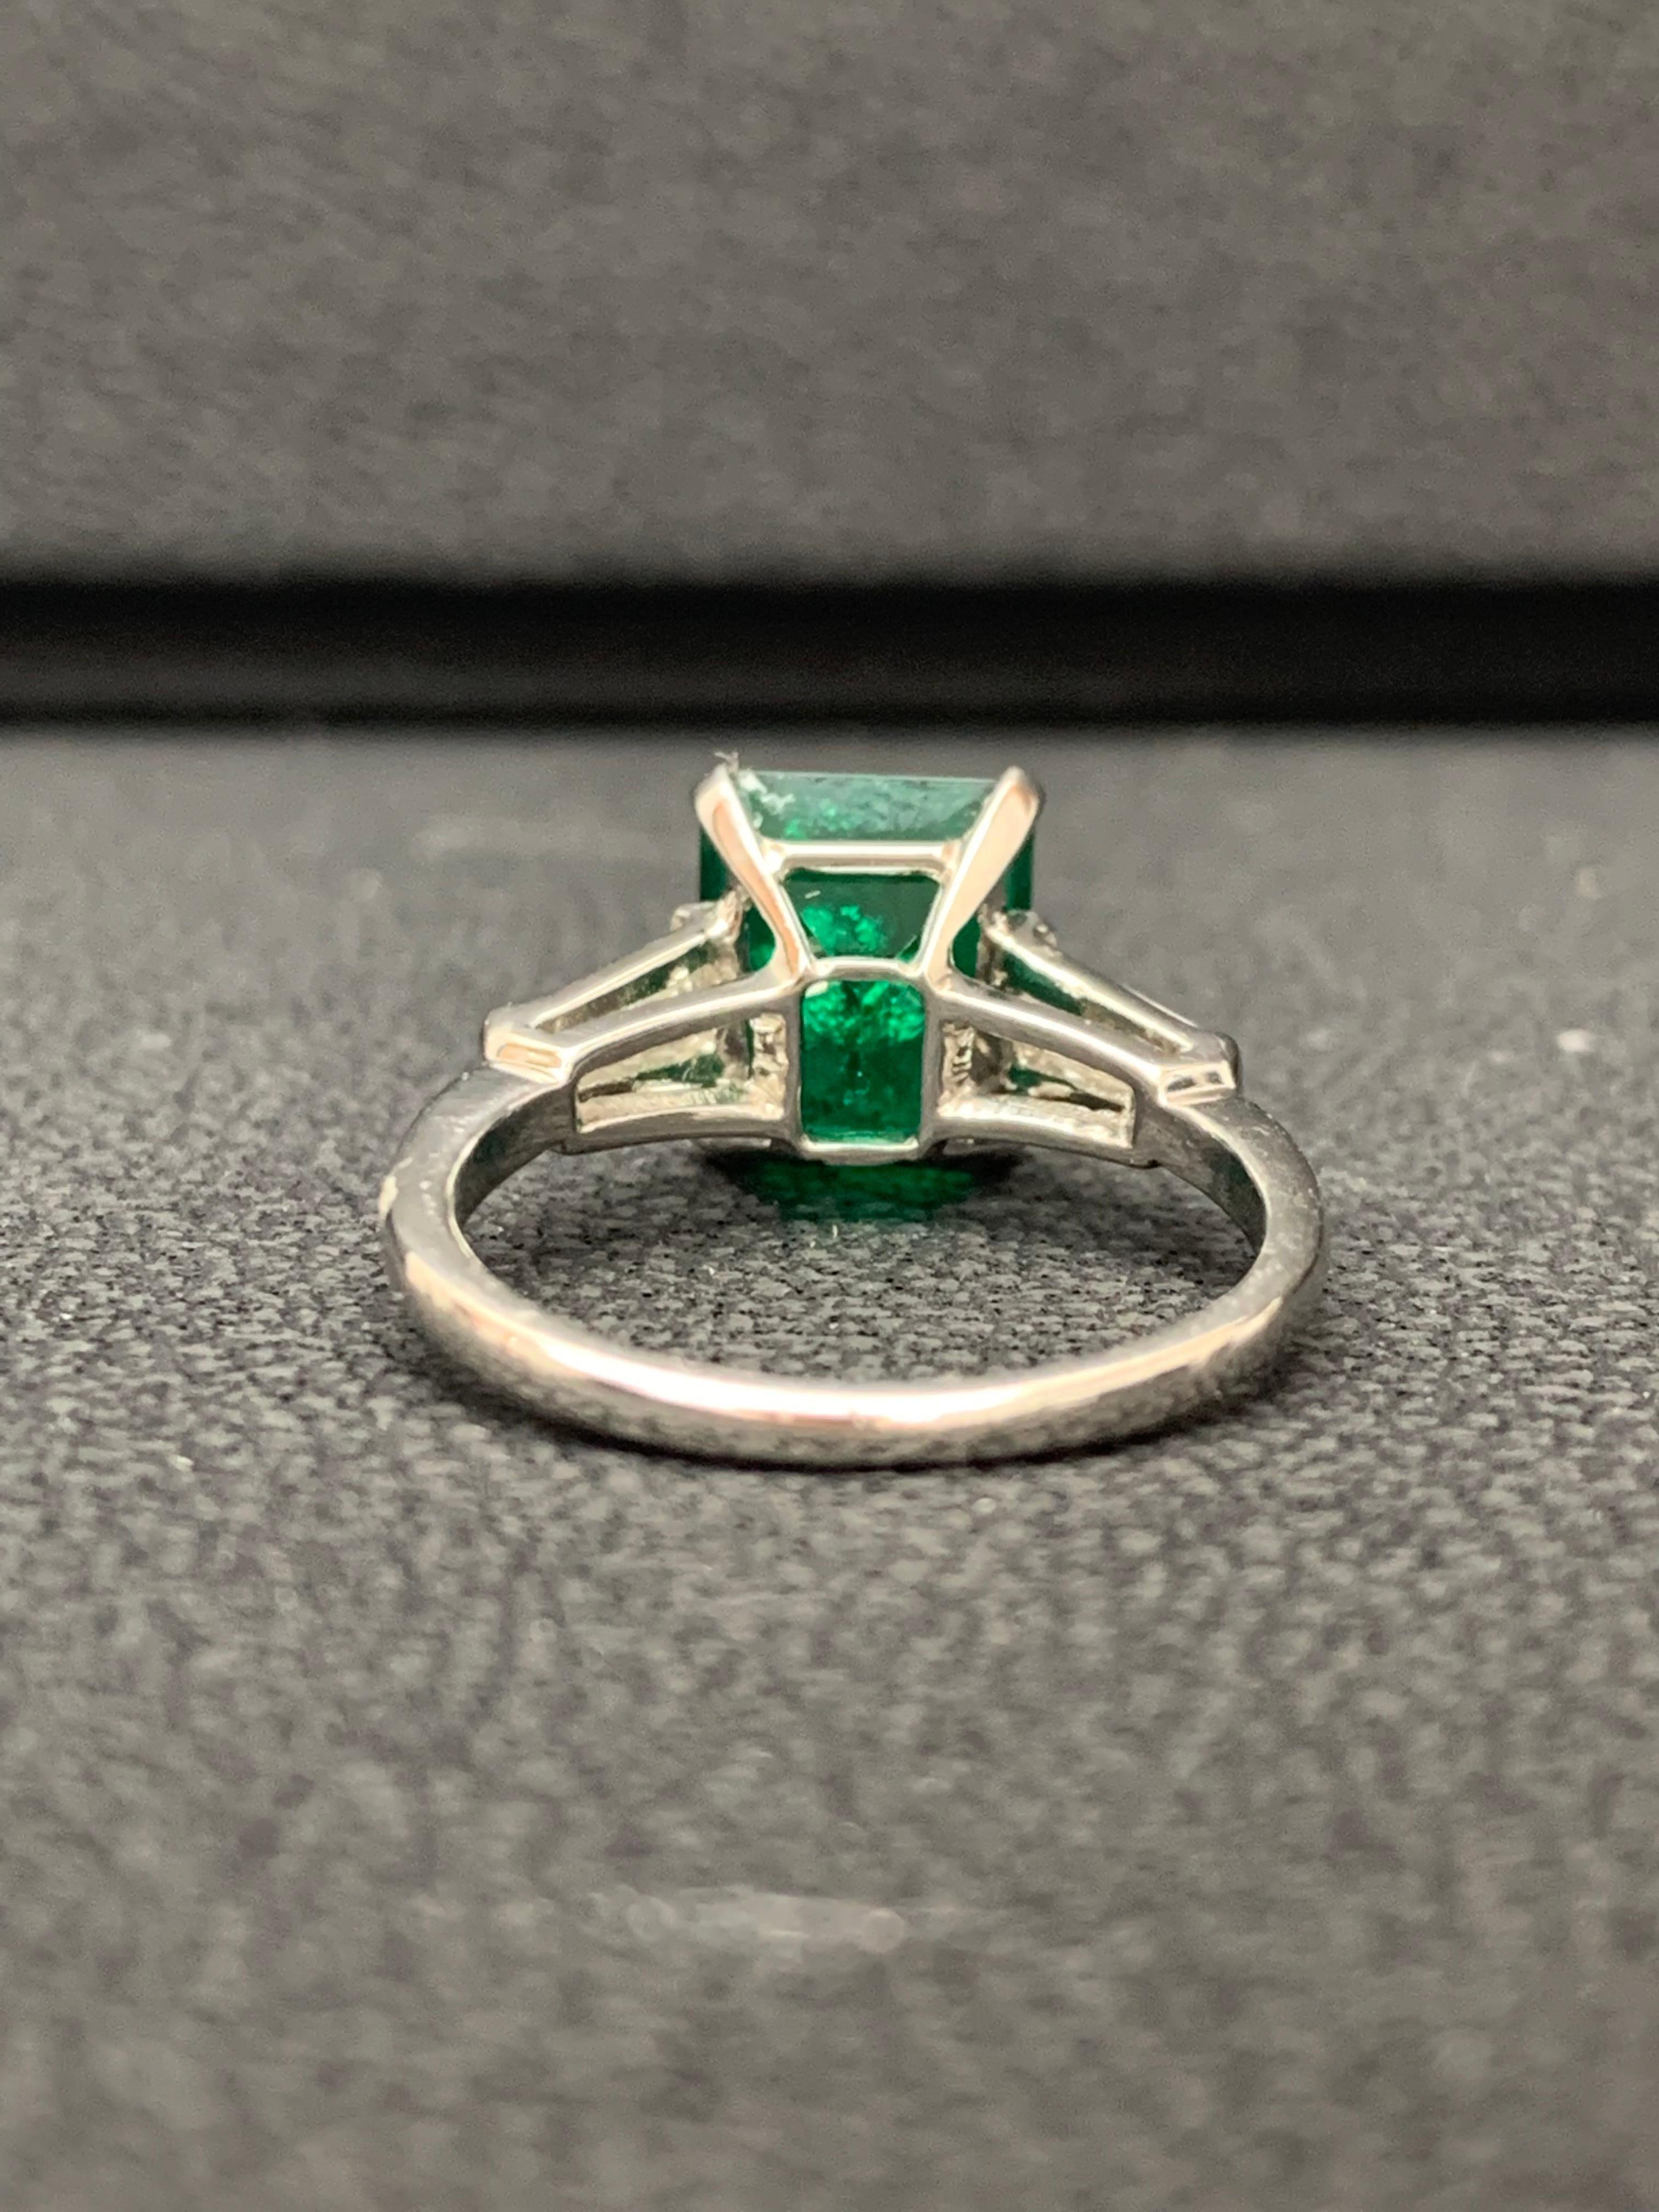 Certified 3.04 Carat Emerald Cut Columbian Emerald Diamond Ring For Sale 5